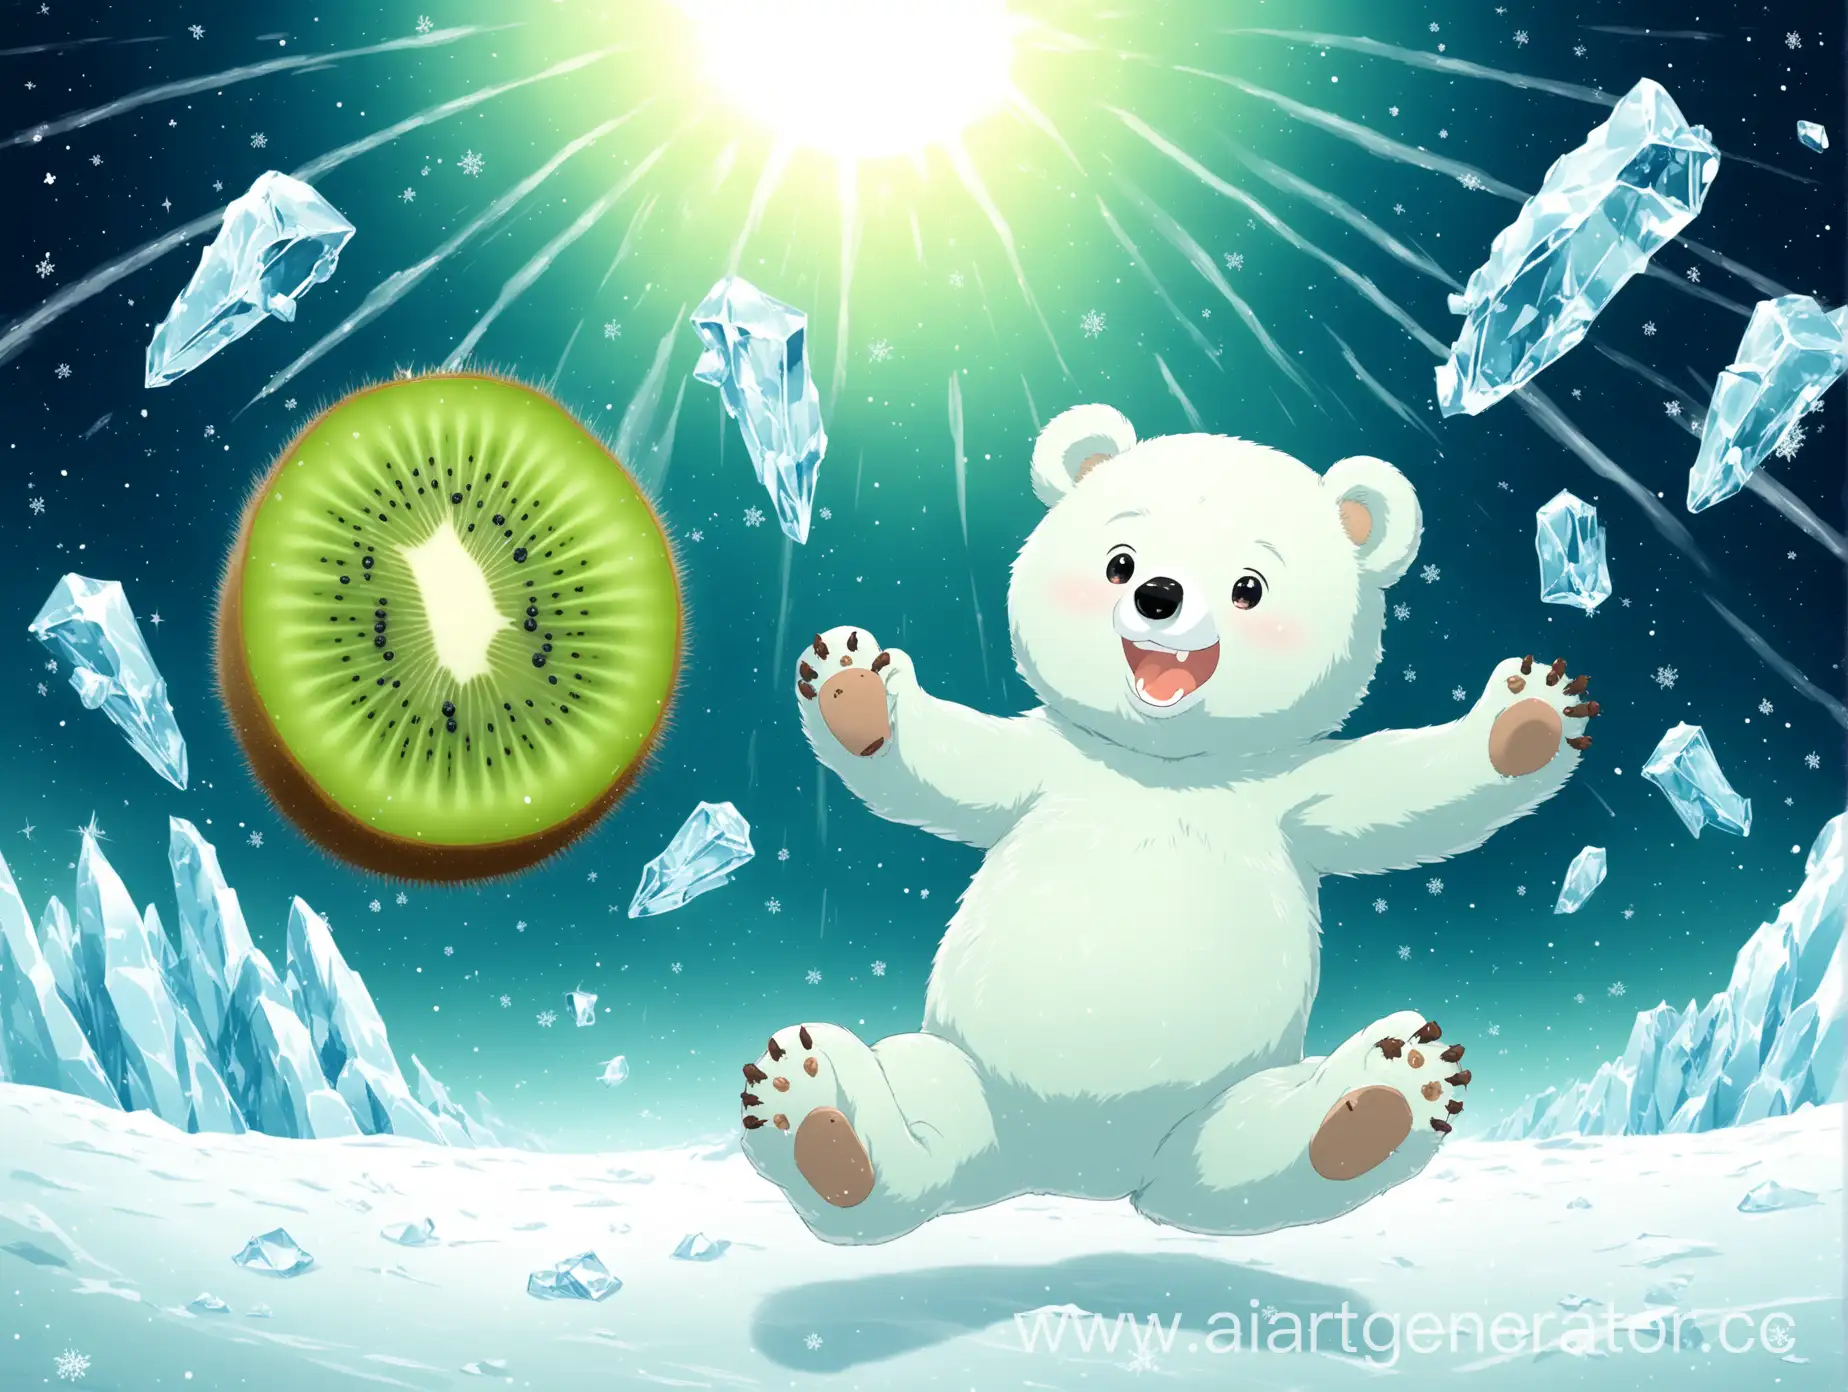 Cheerful-Polar-Bear-Catching-Kiwi-in-an-Icy-Ambiance